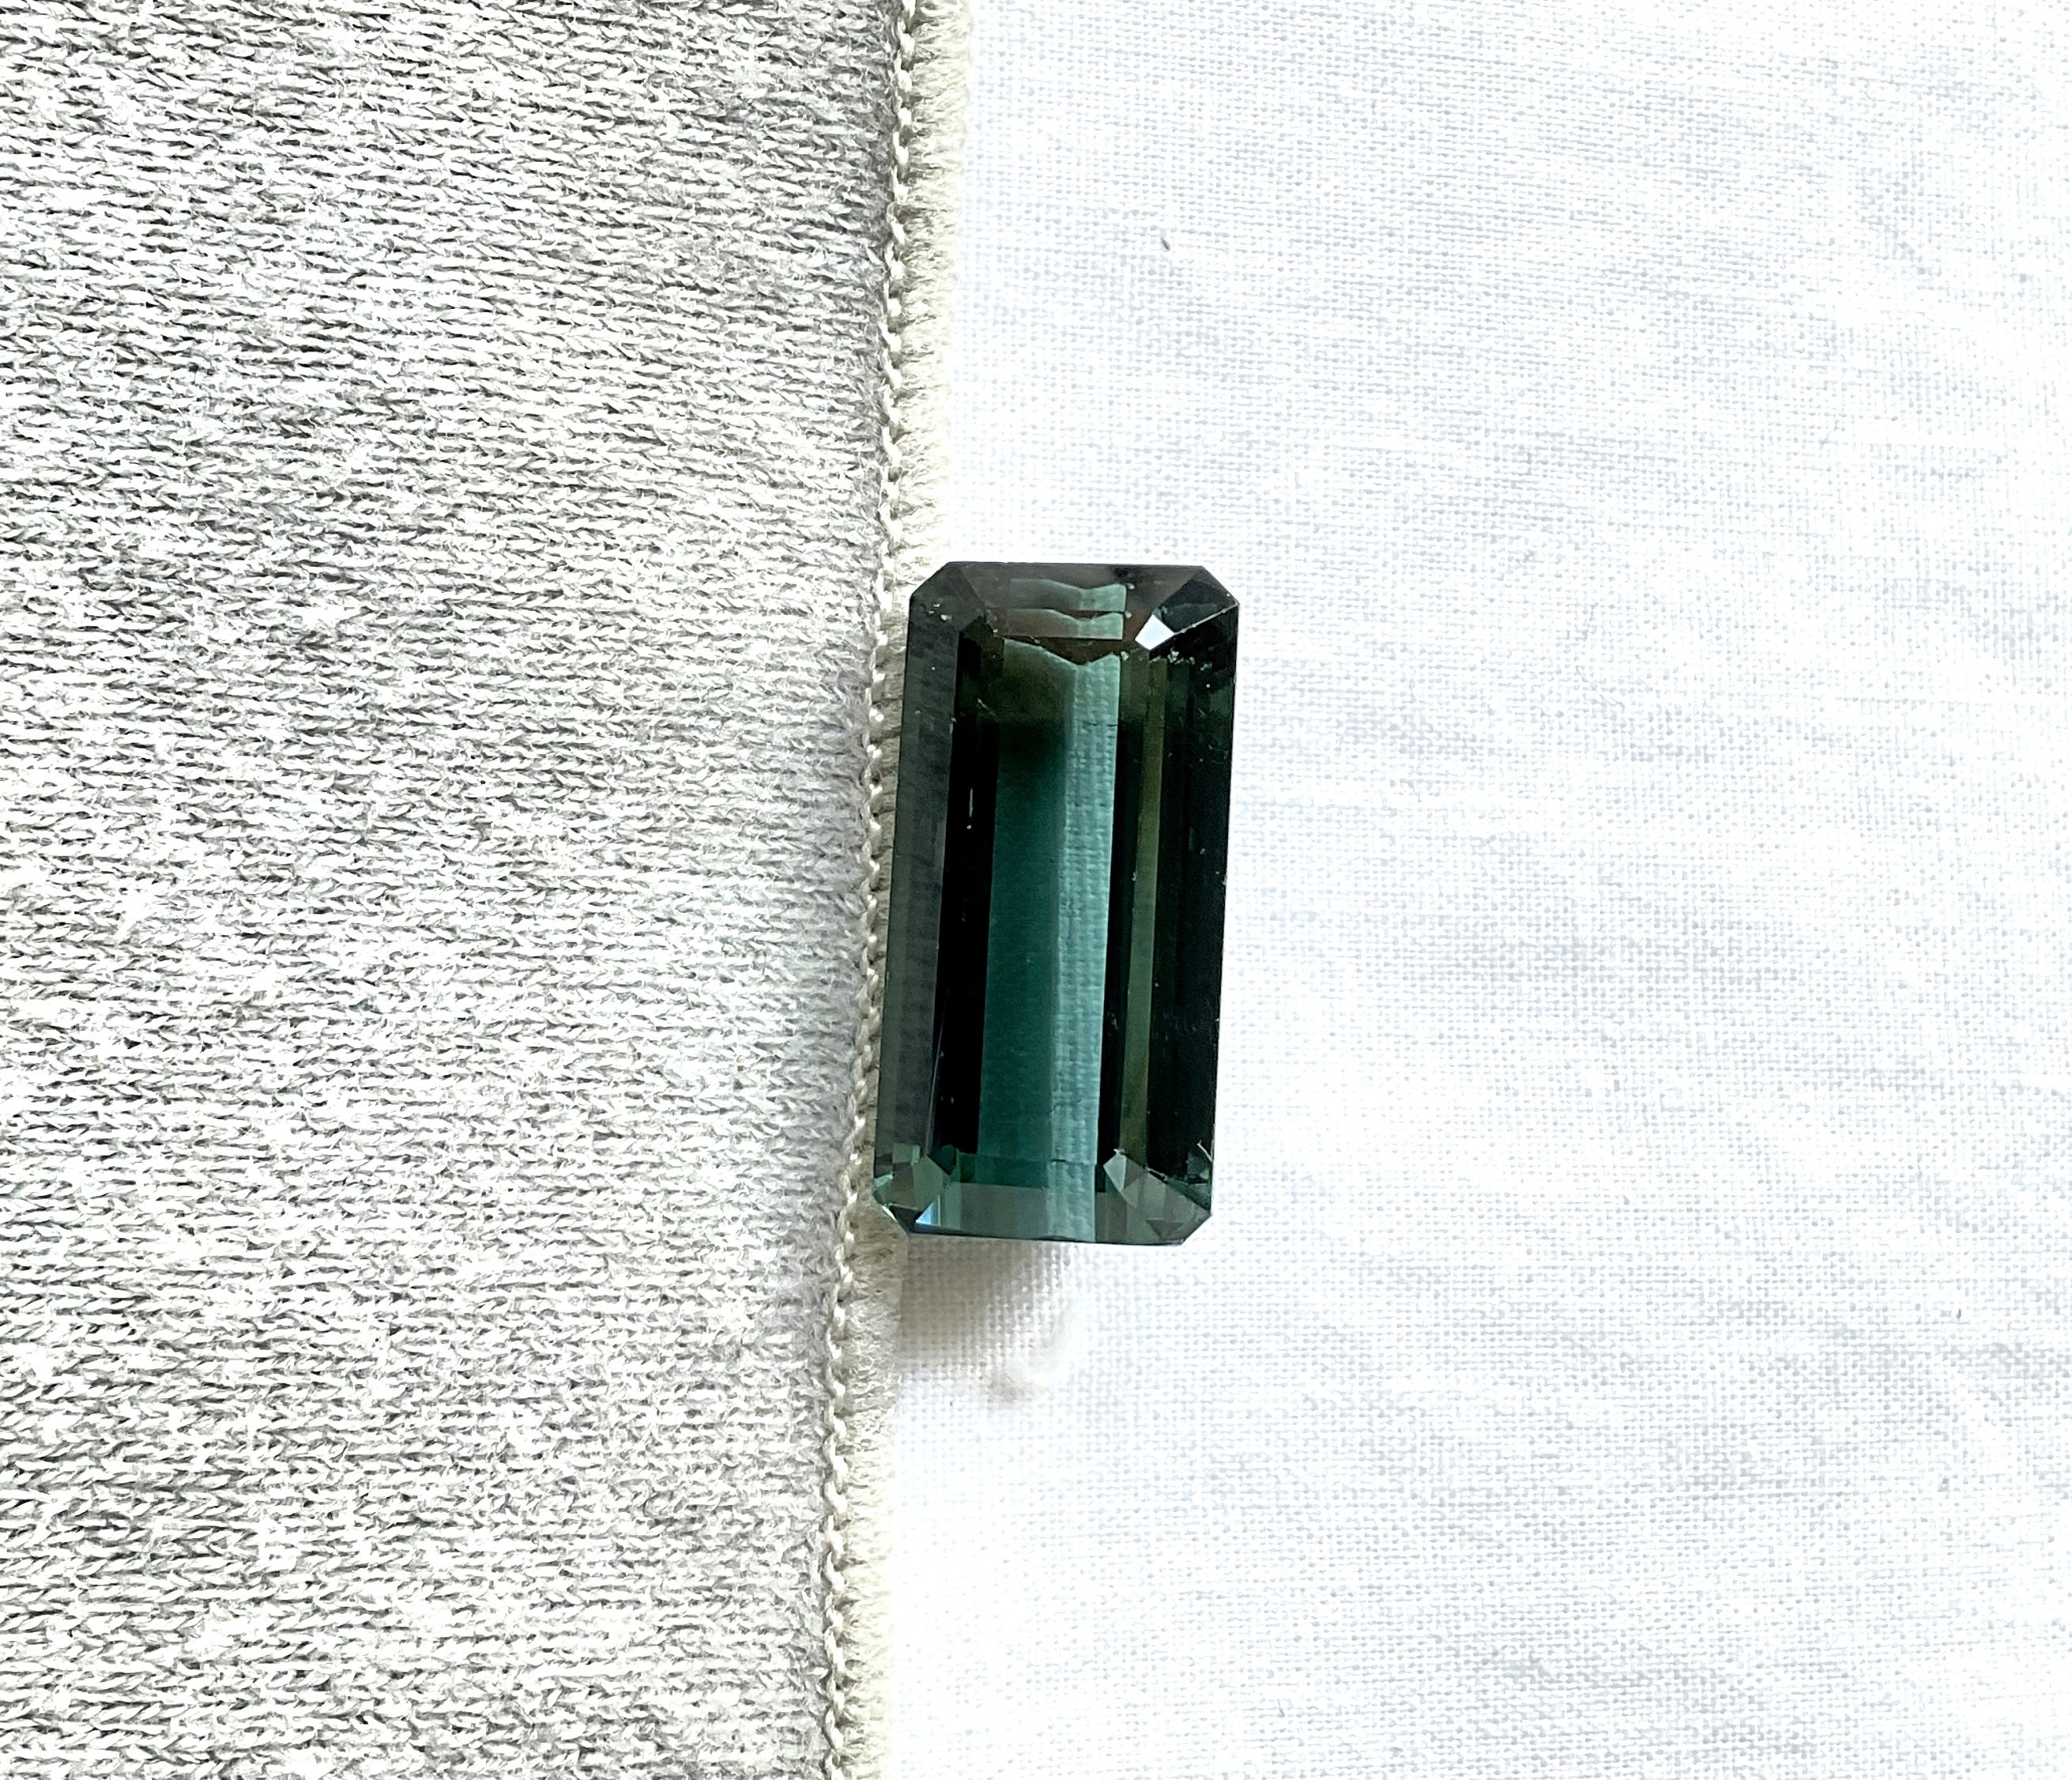 Gemstone - Indicolite Tourmaline
Weight- 18.73 Carats
Shape - Octagon
Size - 20.20x10x9 MM
Pieces - 1